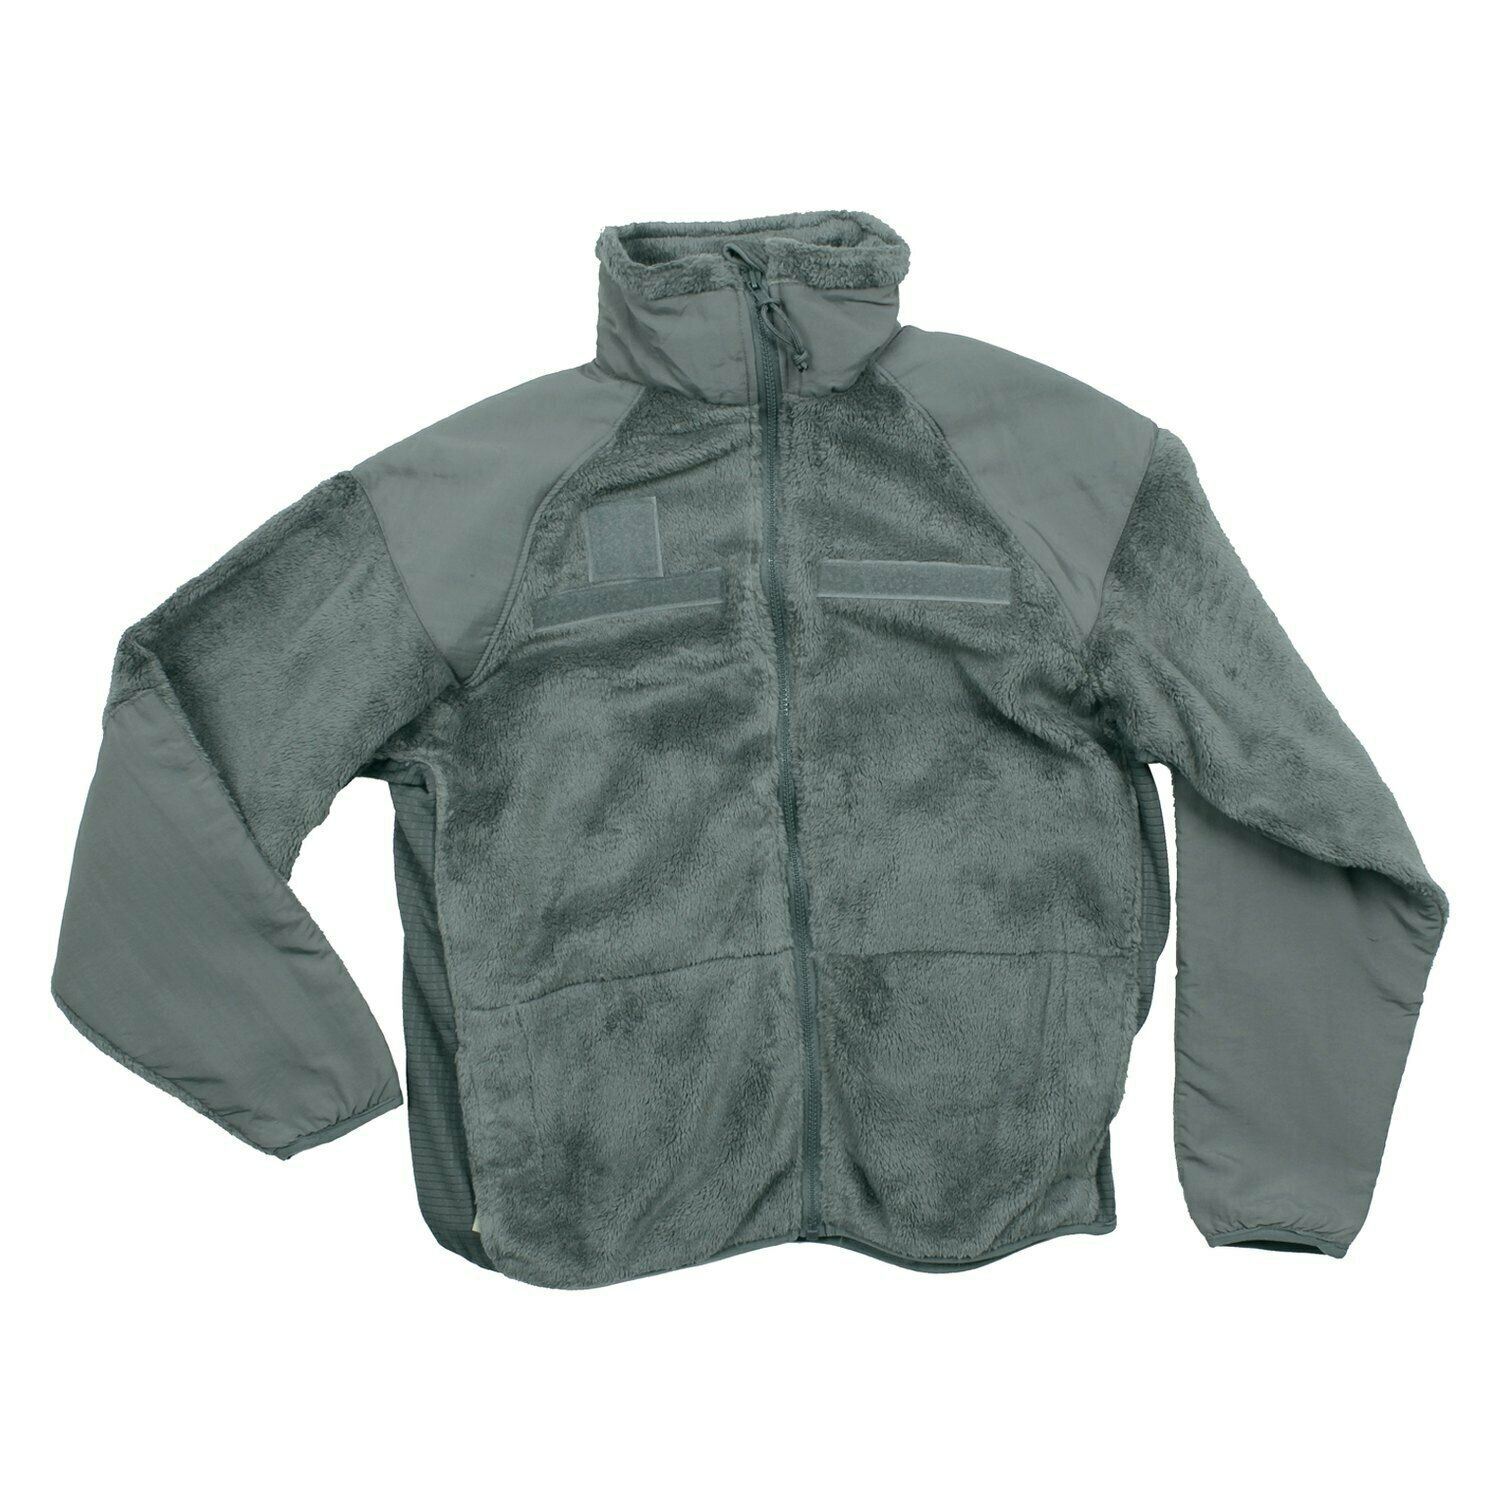 Usgi Military Issue Polartec Gen Lll Fleece Jacket Foliage Green